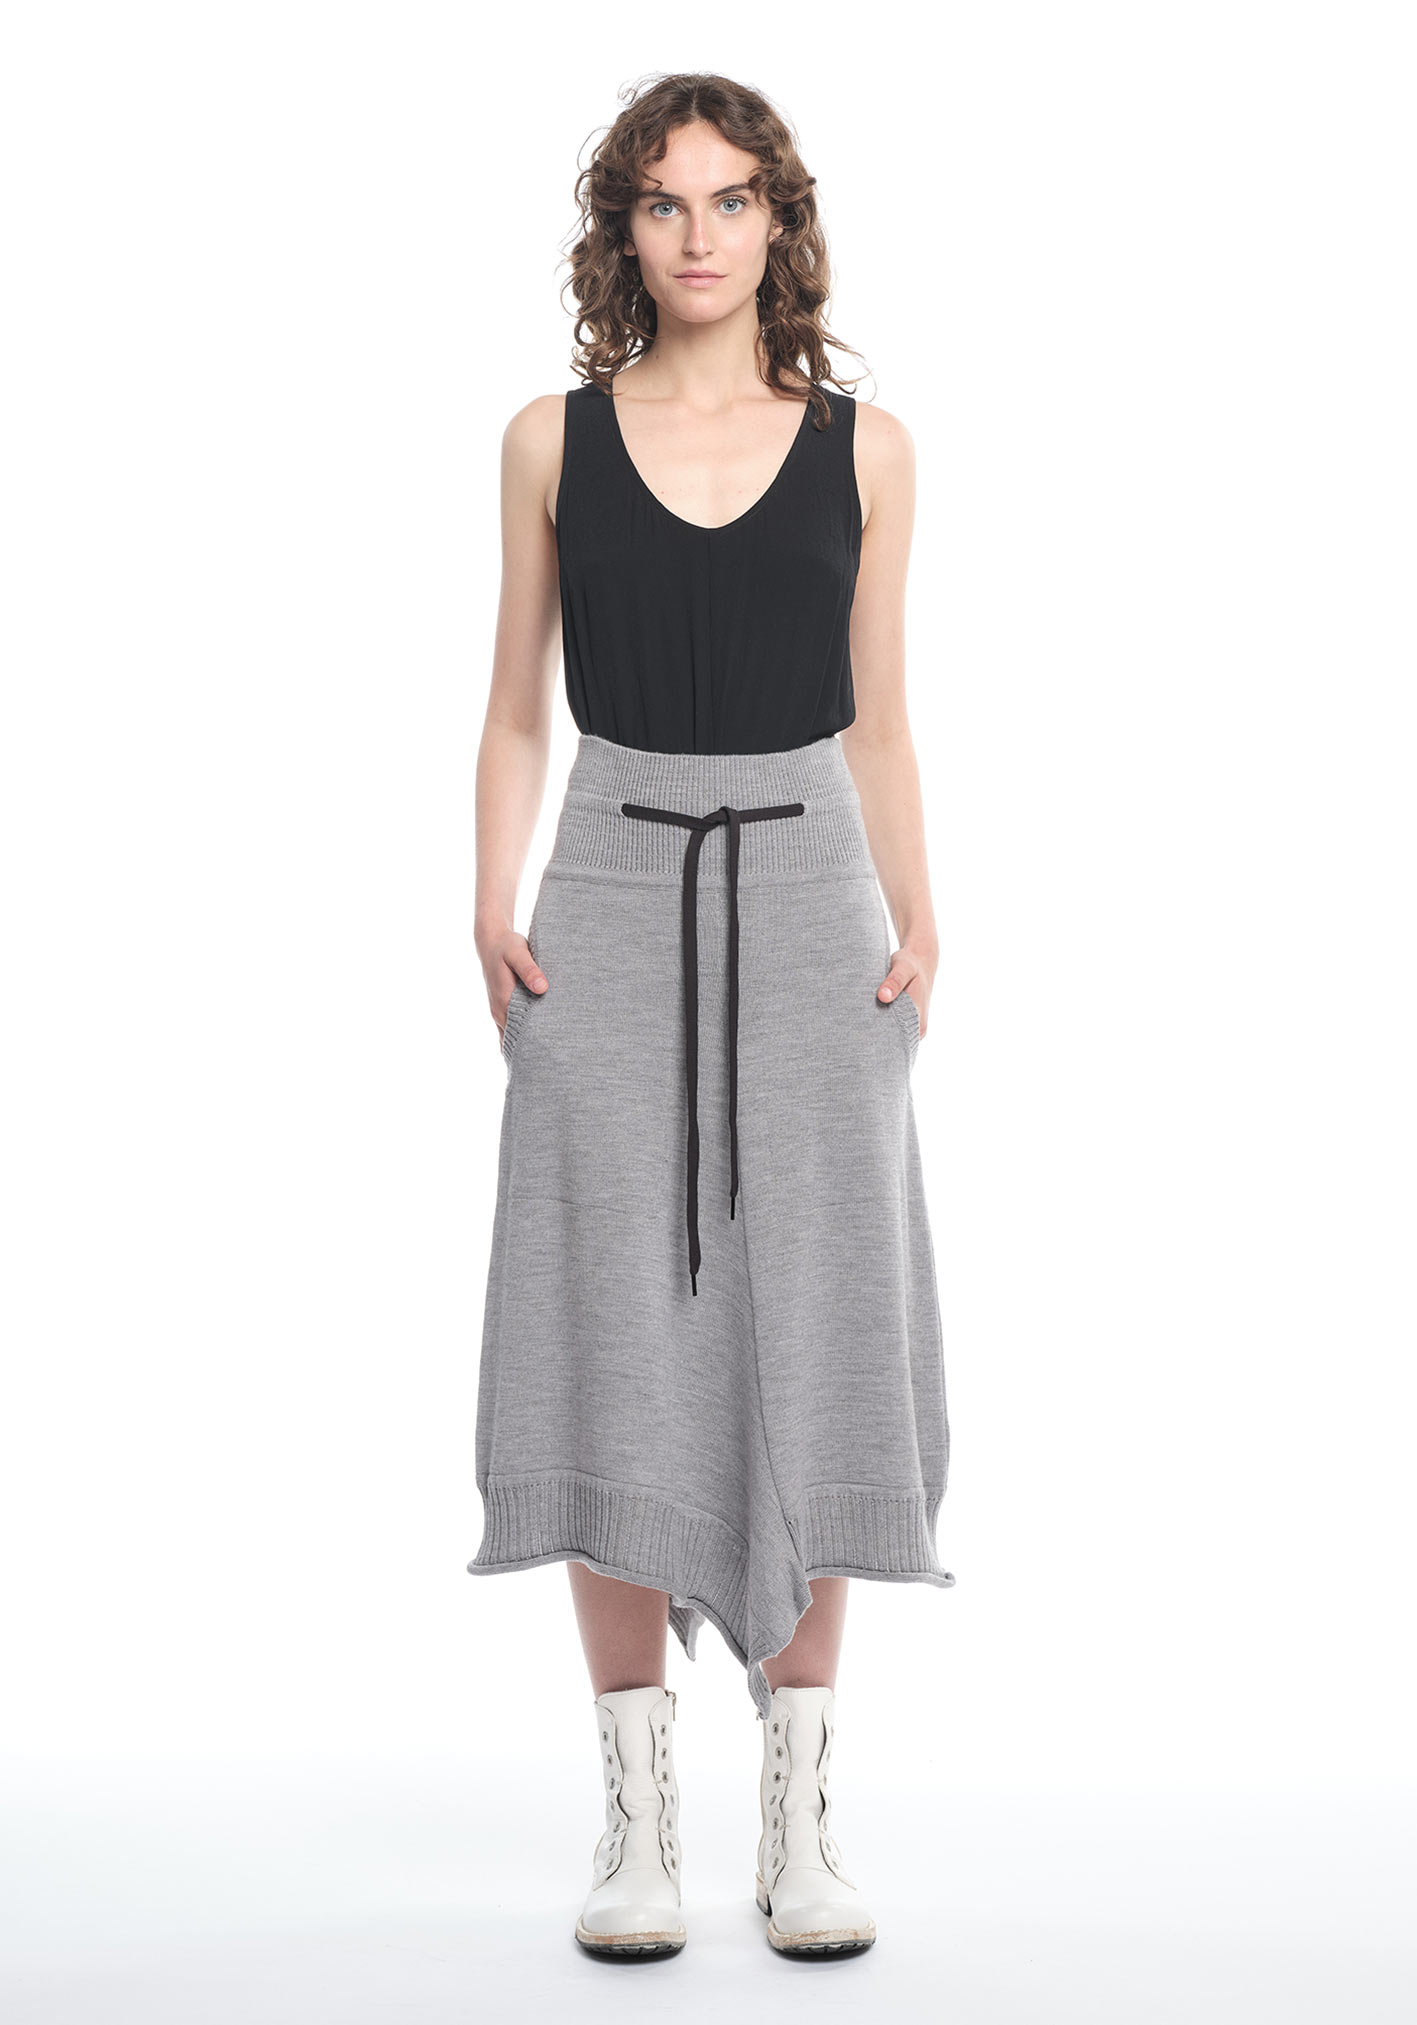 buy the latest Utility Skirt online